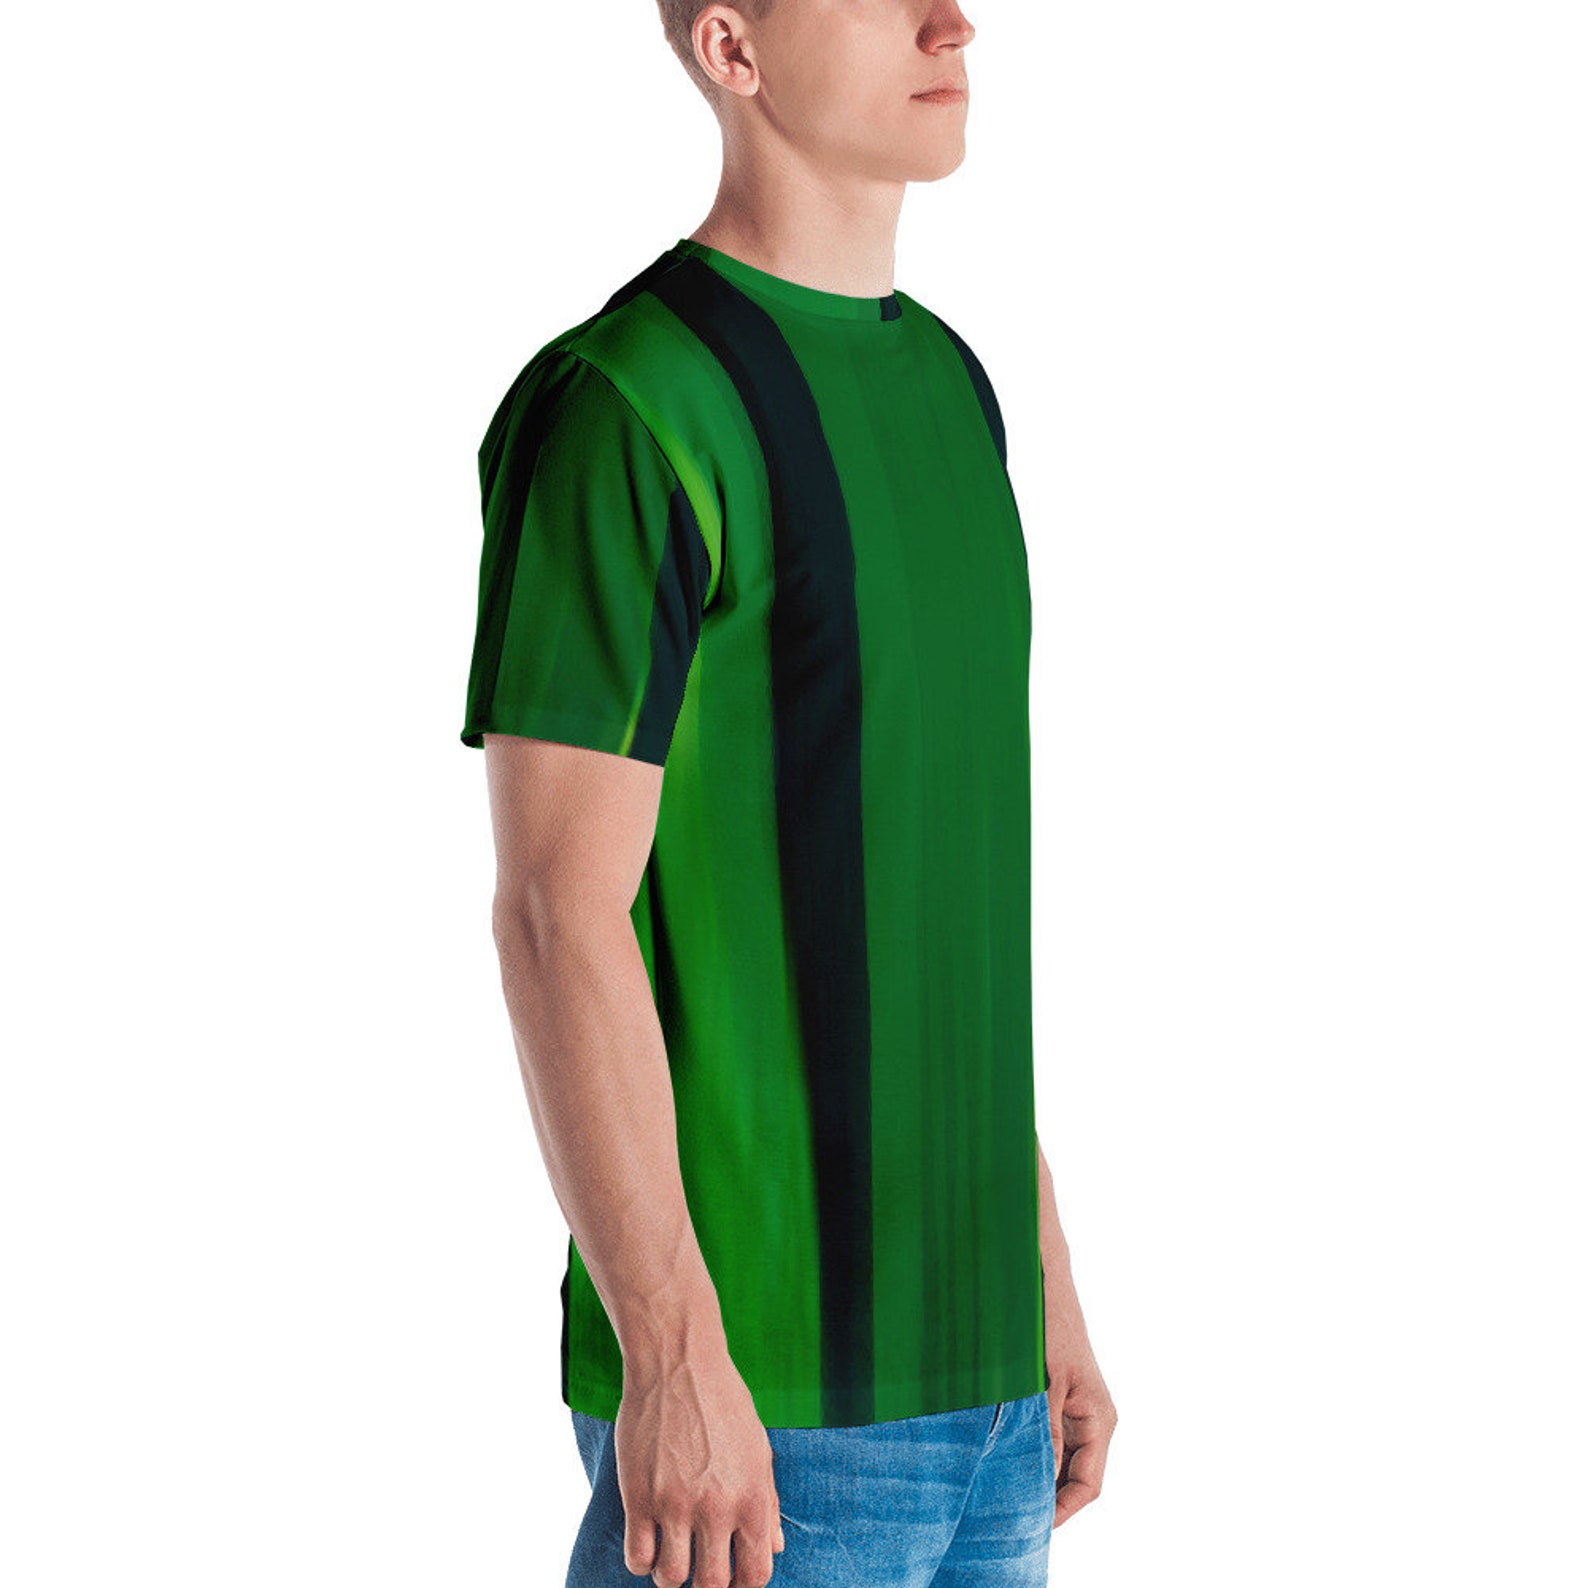 Green & Black Men's T-shirt Free shipping | Etsy